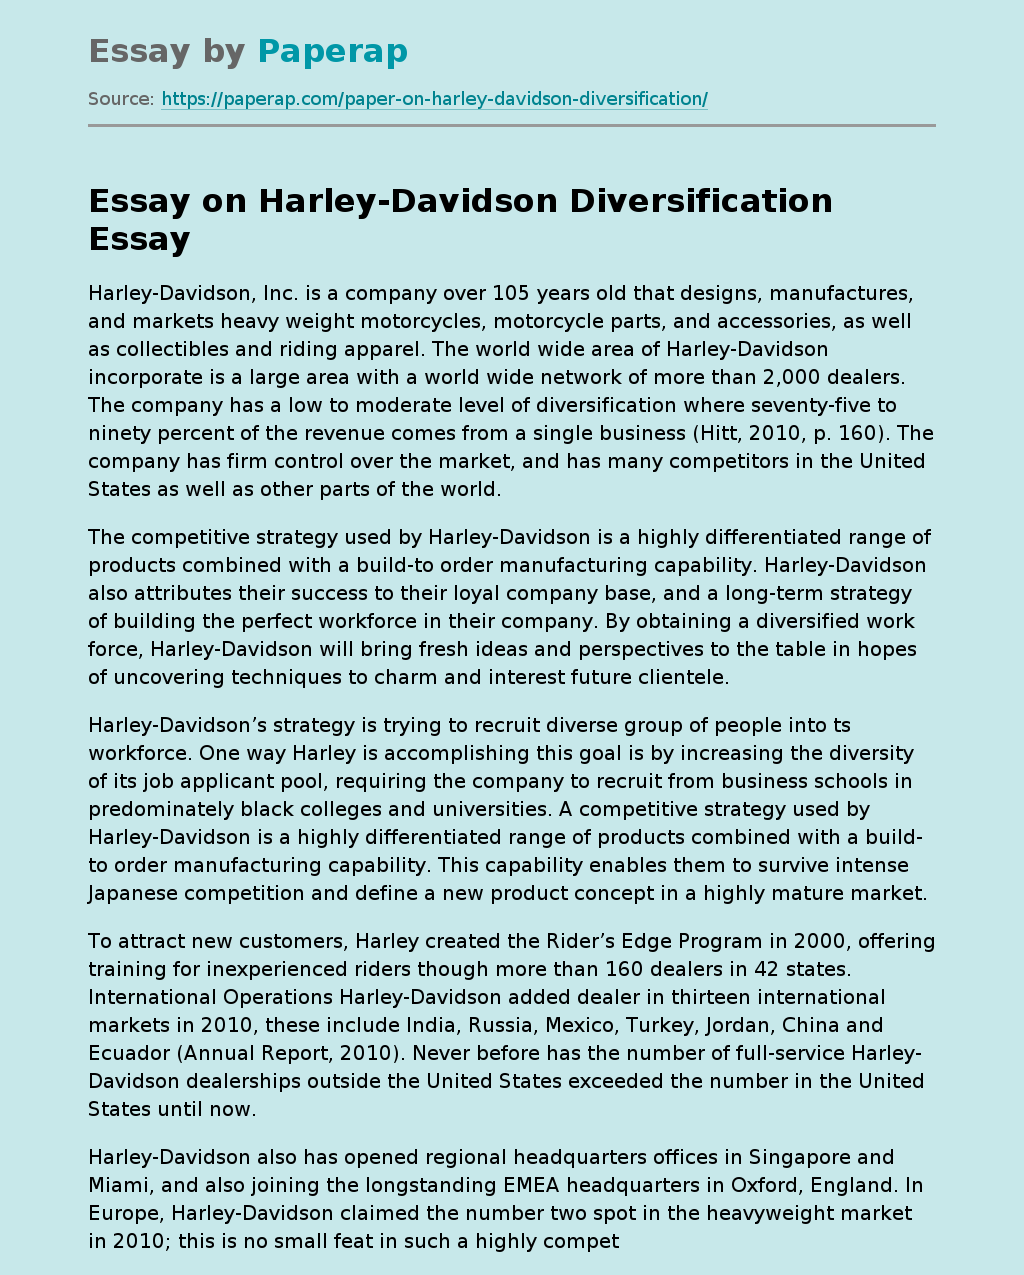 On Harley-Davidson Diversification